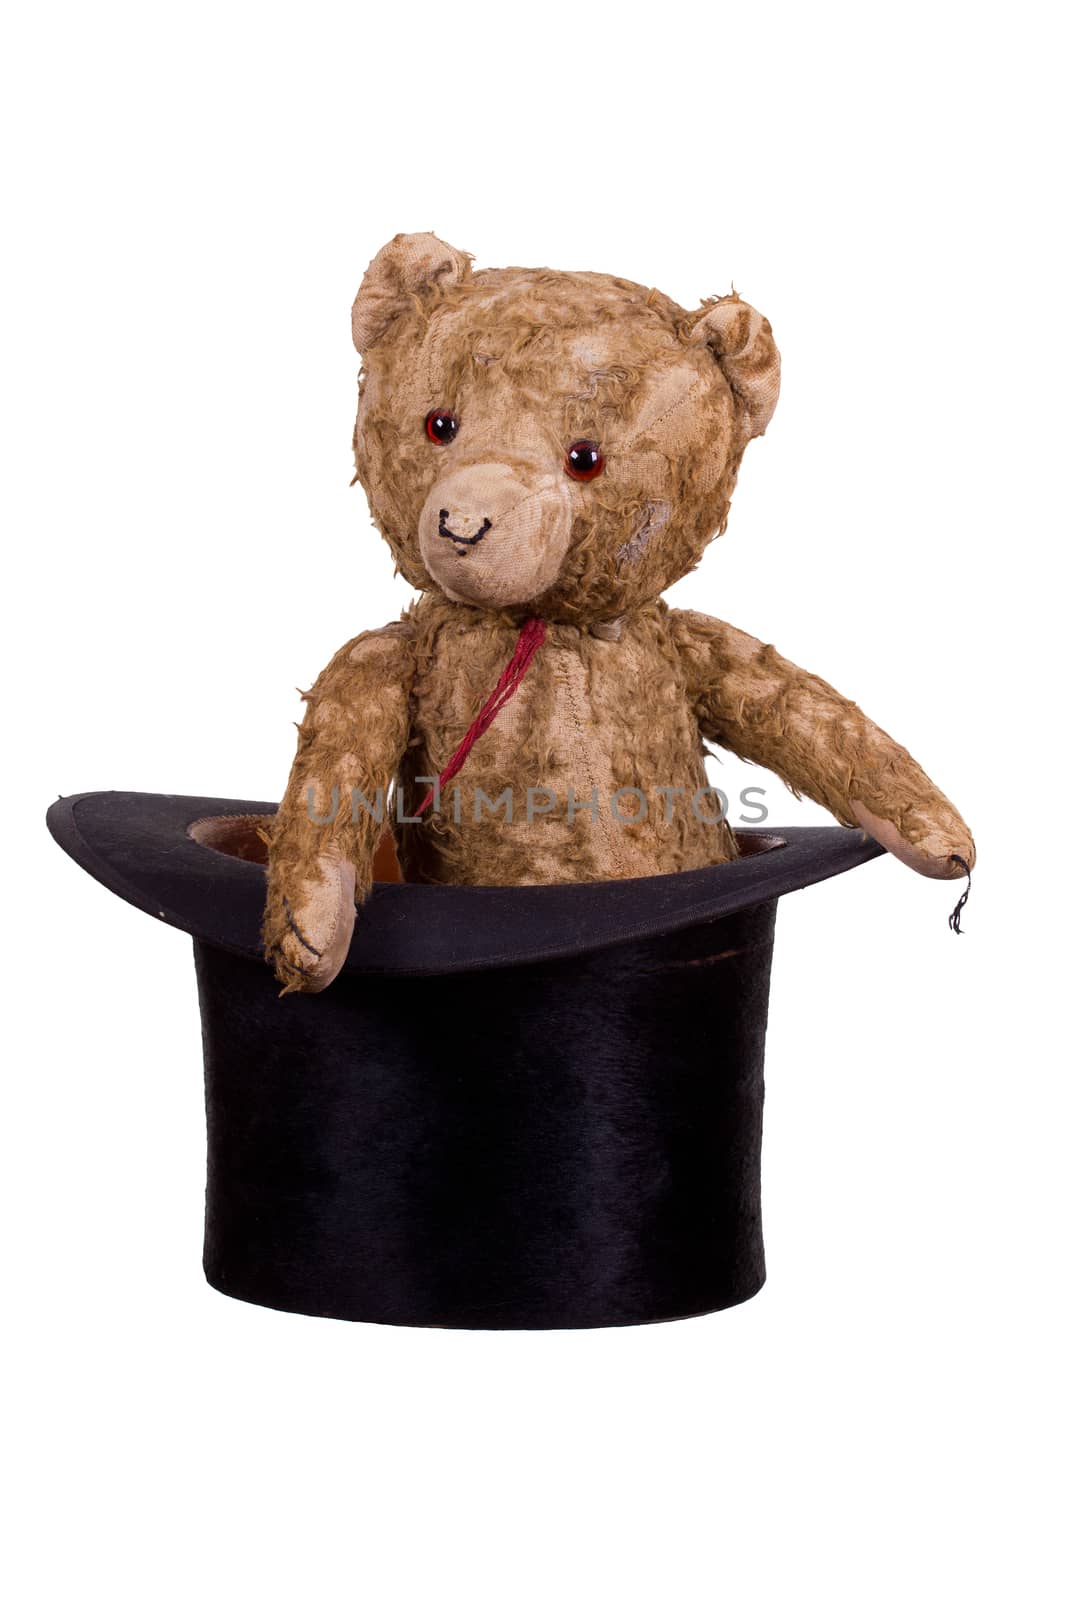 old teddybear sitting in old black hat